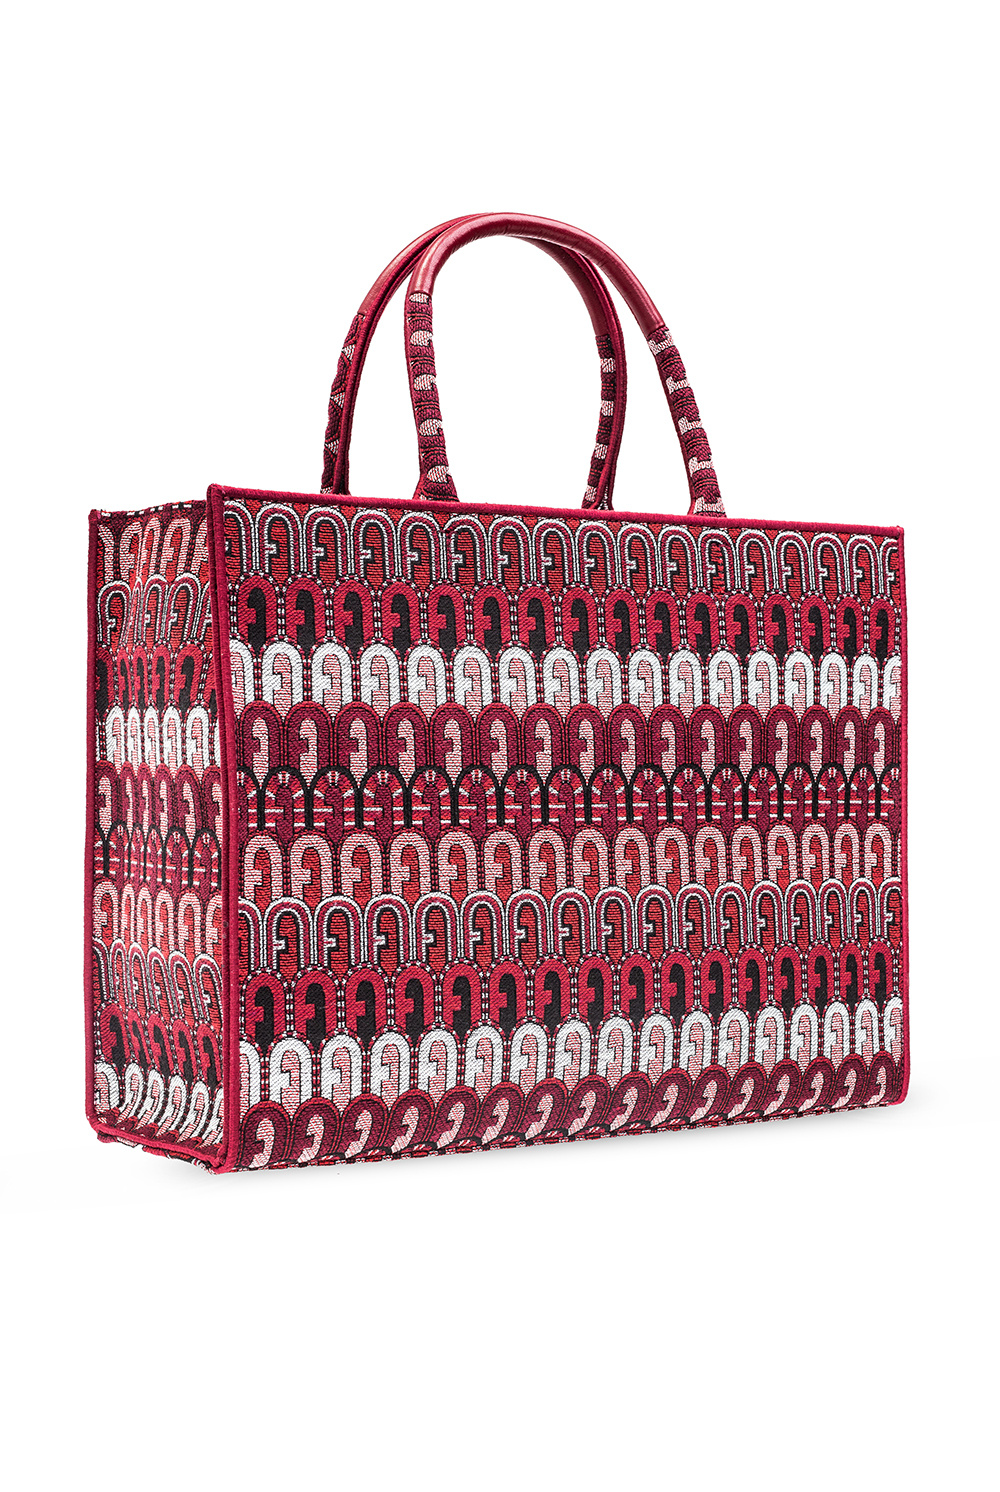 Women's plaid Bags, Furla 'Opportunity' handbag, IetpShops